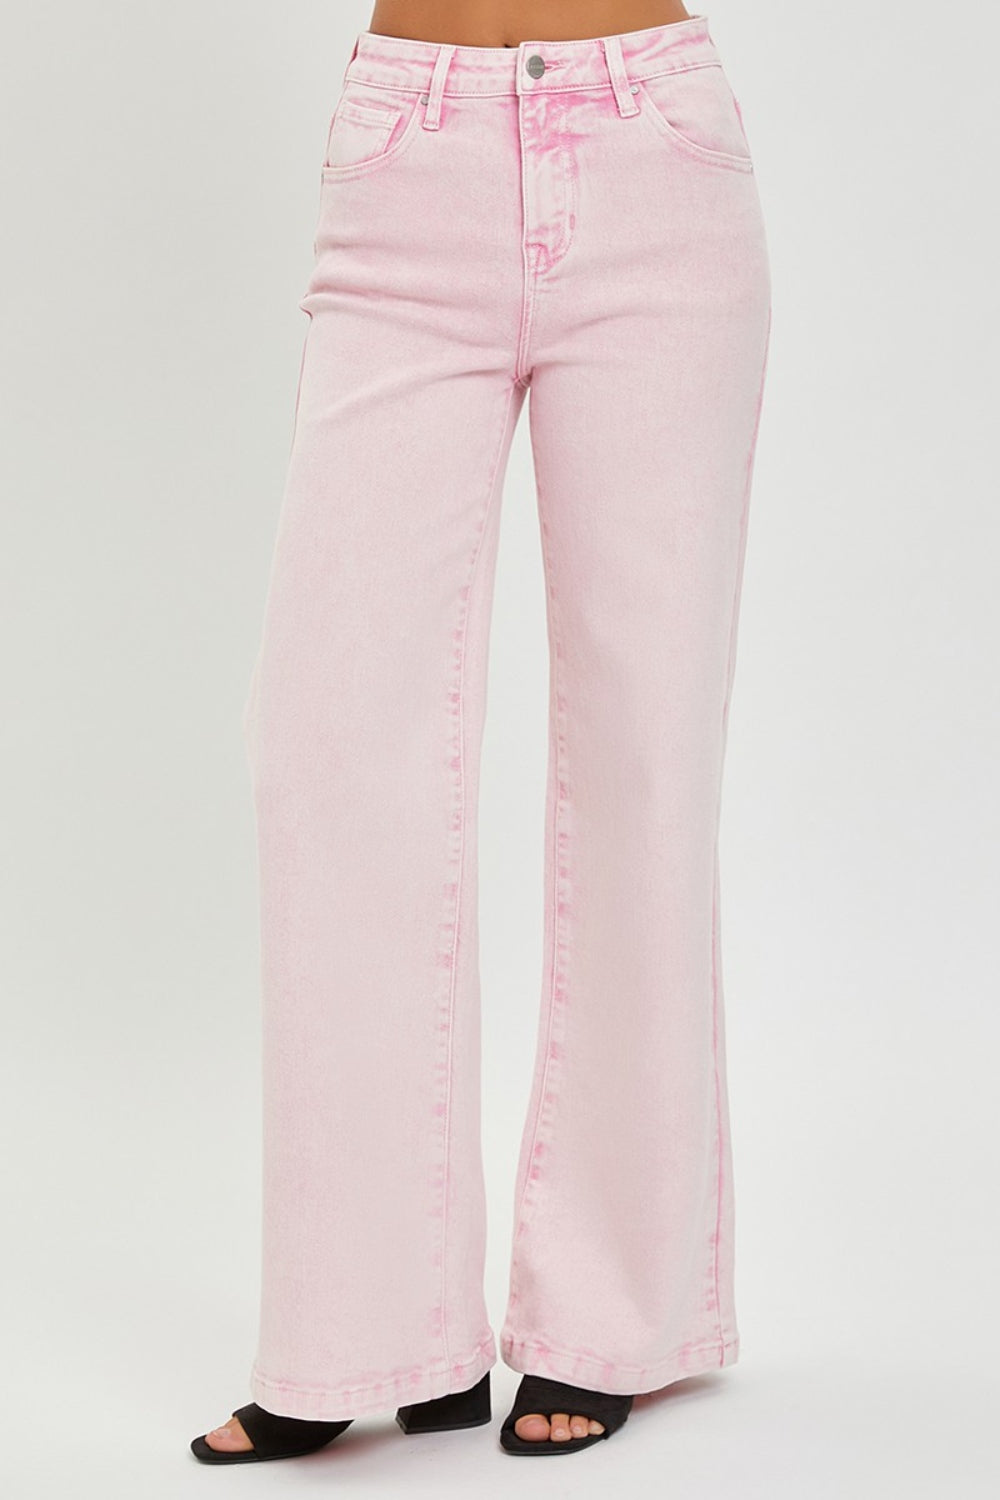 RISEN High Rise Tummy Control Wide Leg Pink Jeans